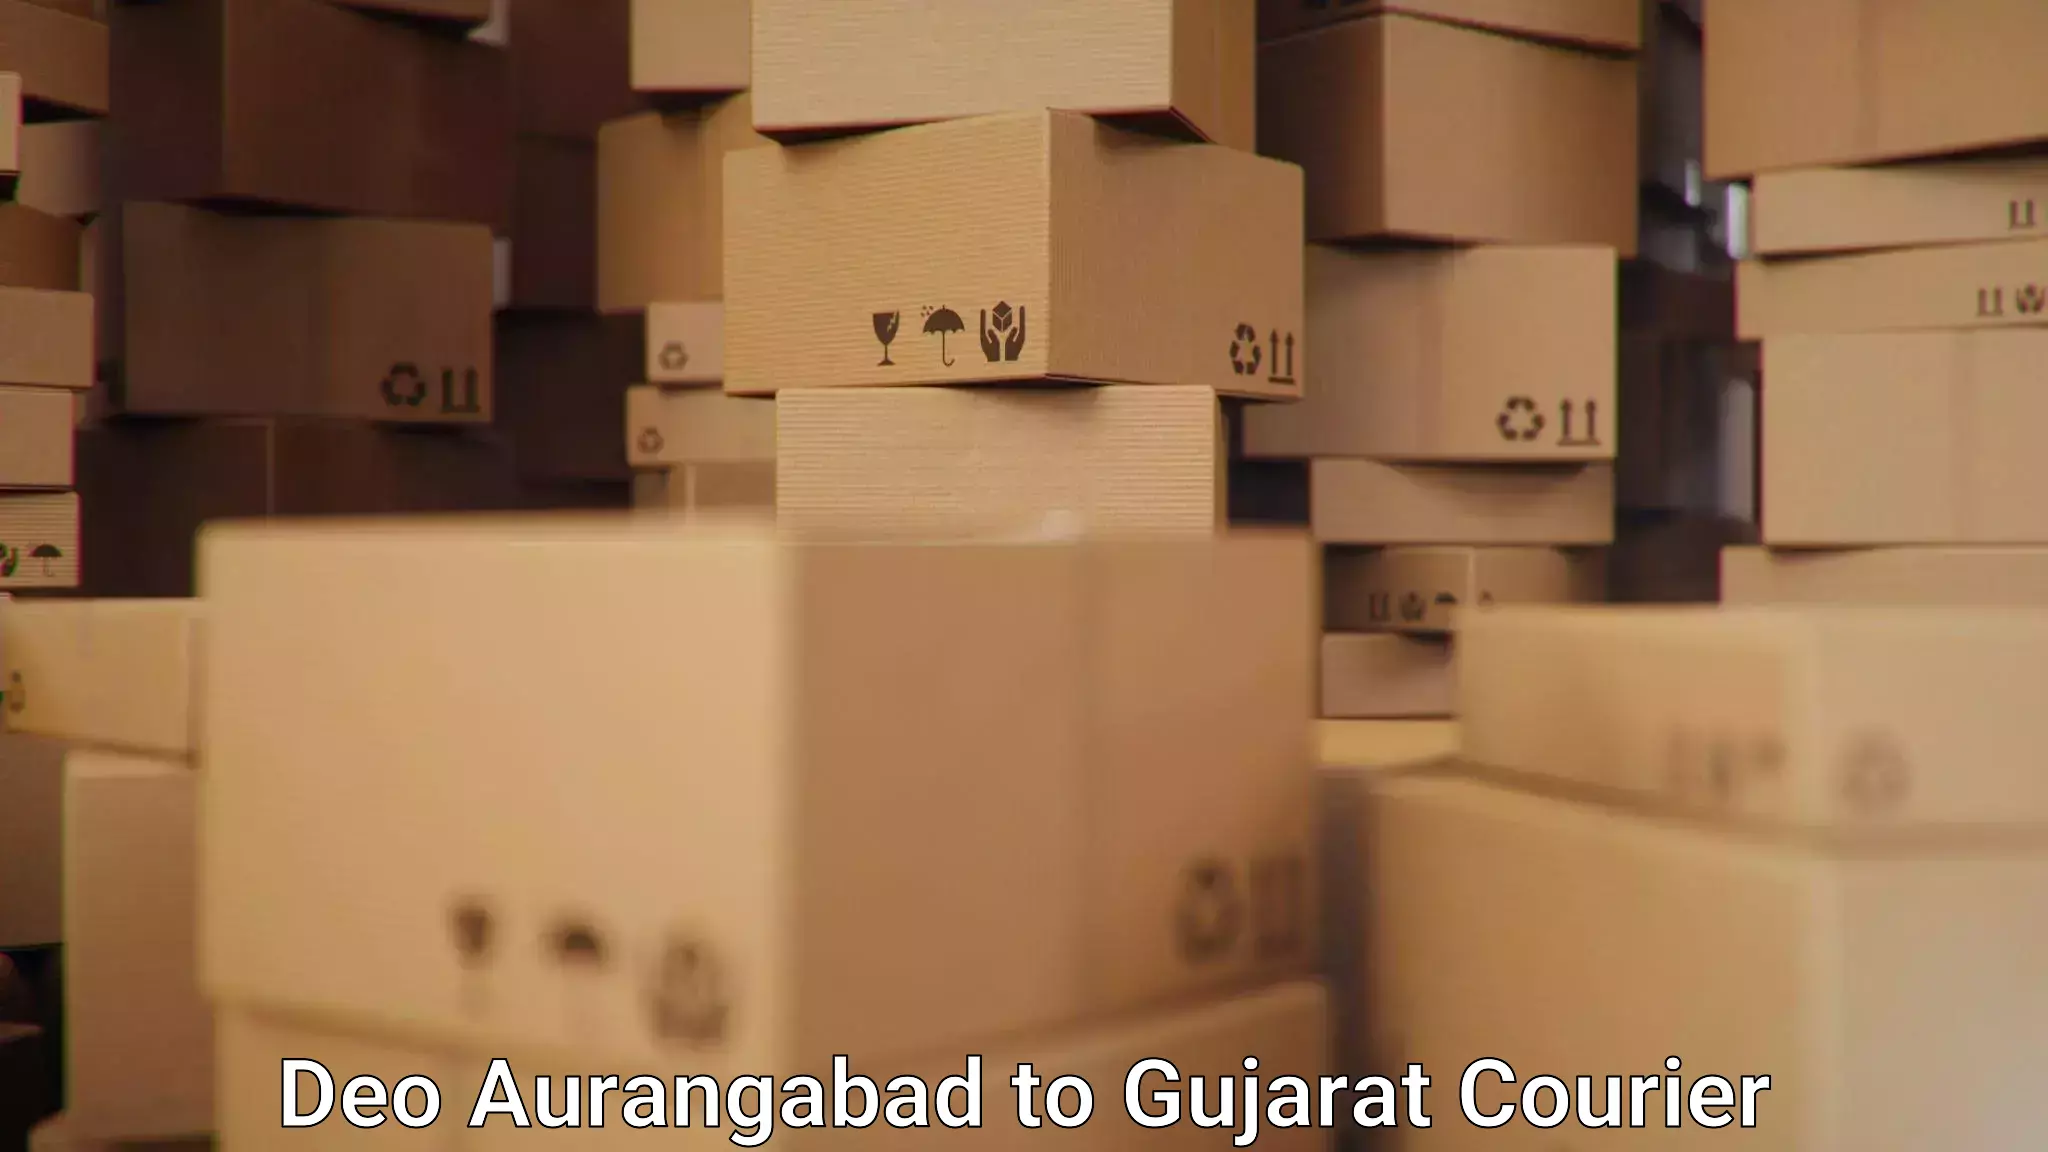 Courier service booking Deo Aurangabad to Jamjodhpur